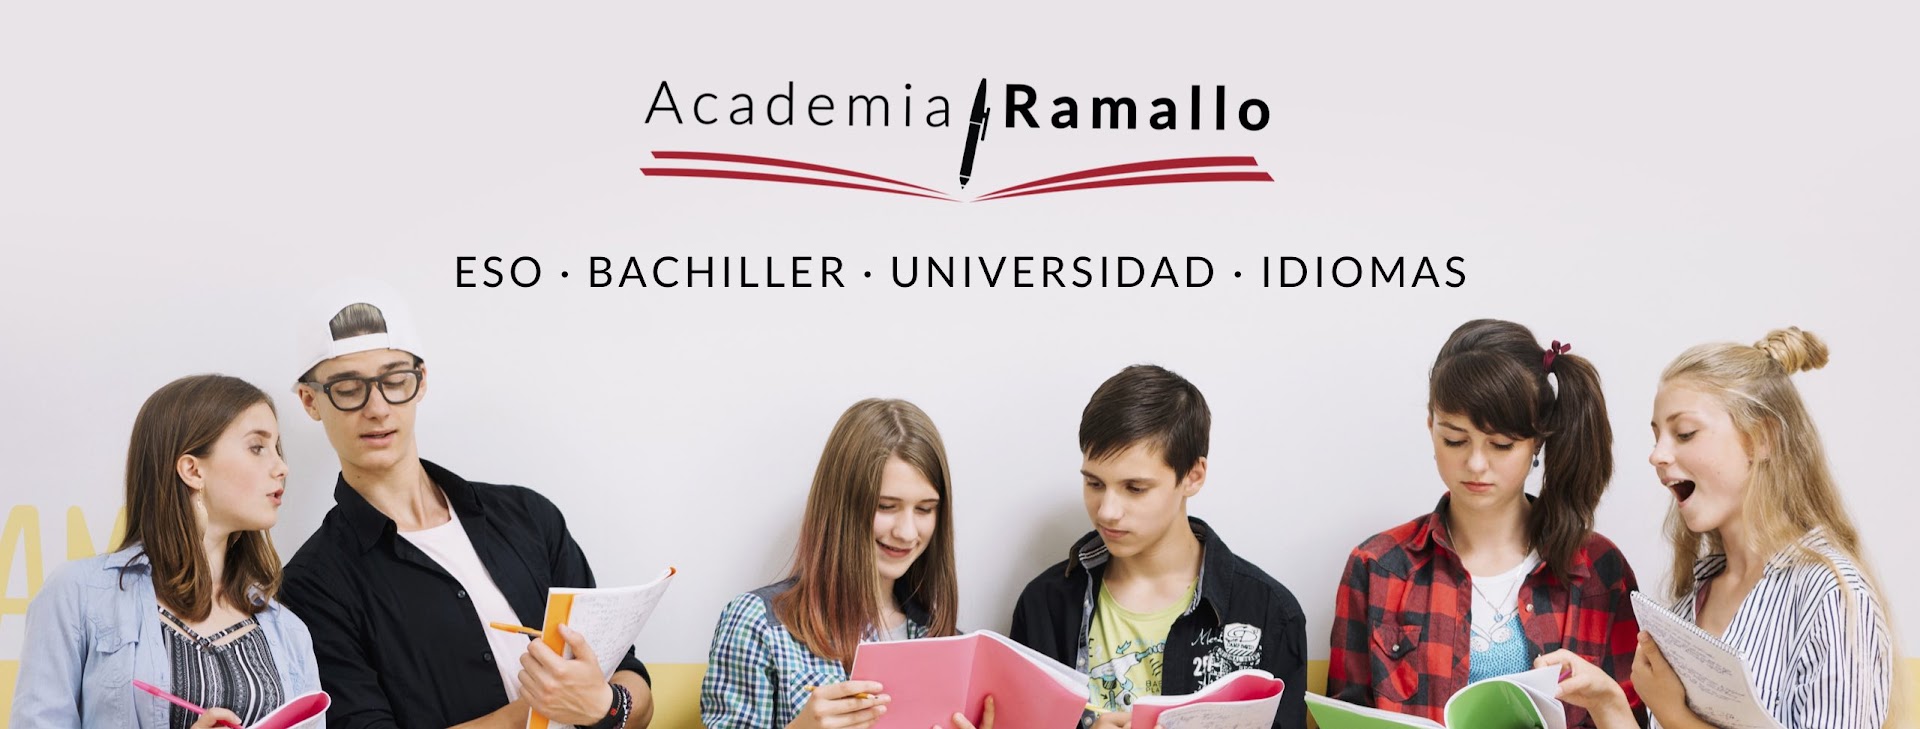 Academia Ramallo